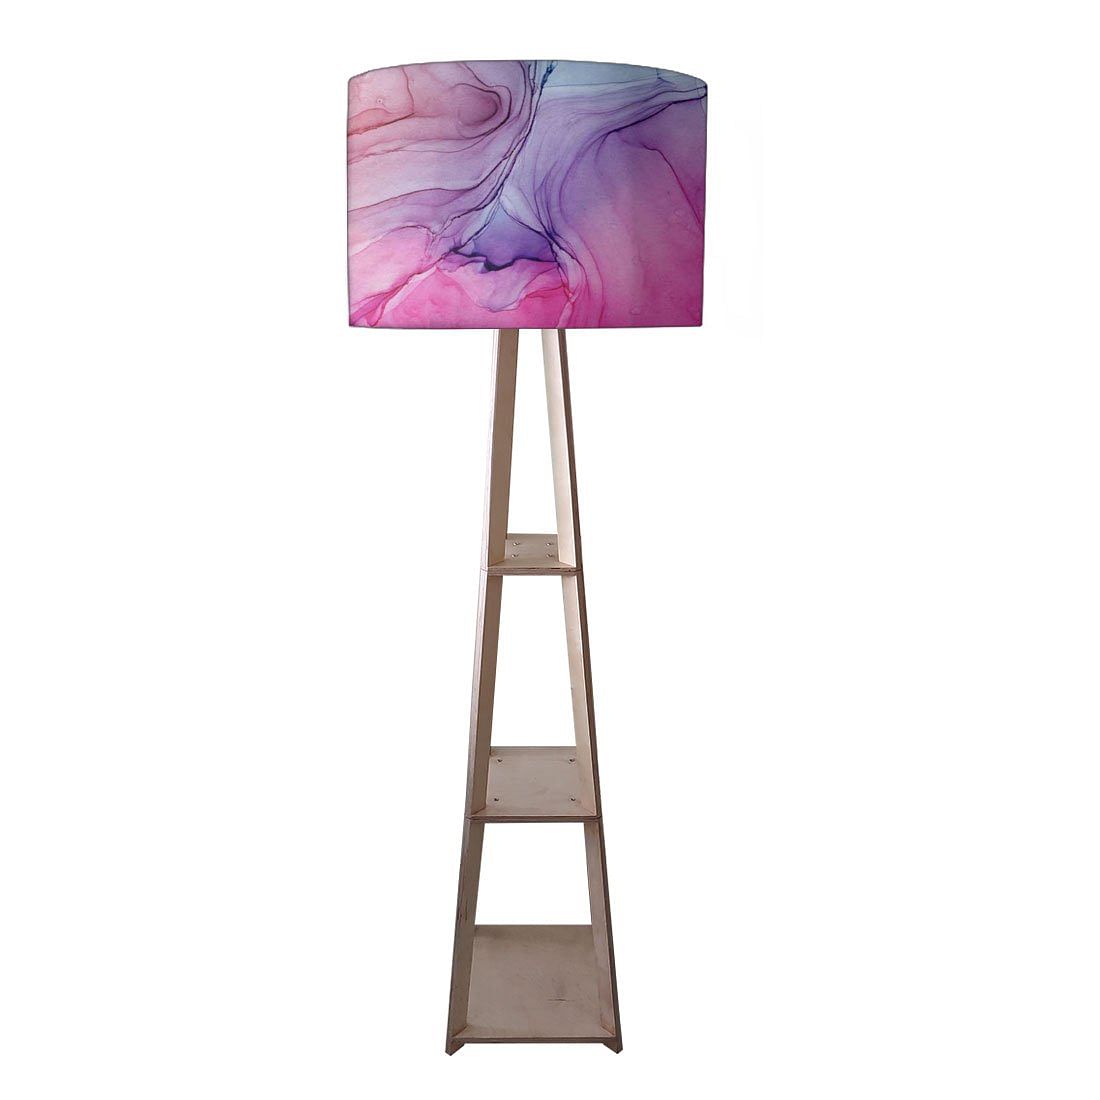 Wooden Floor Shelf Lamps for Living Room - Watercolor Nutcase